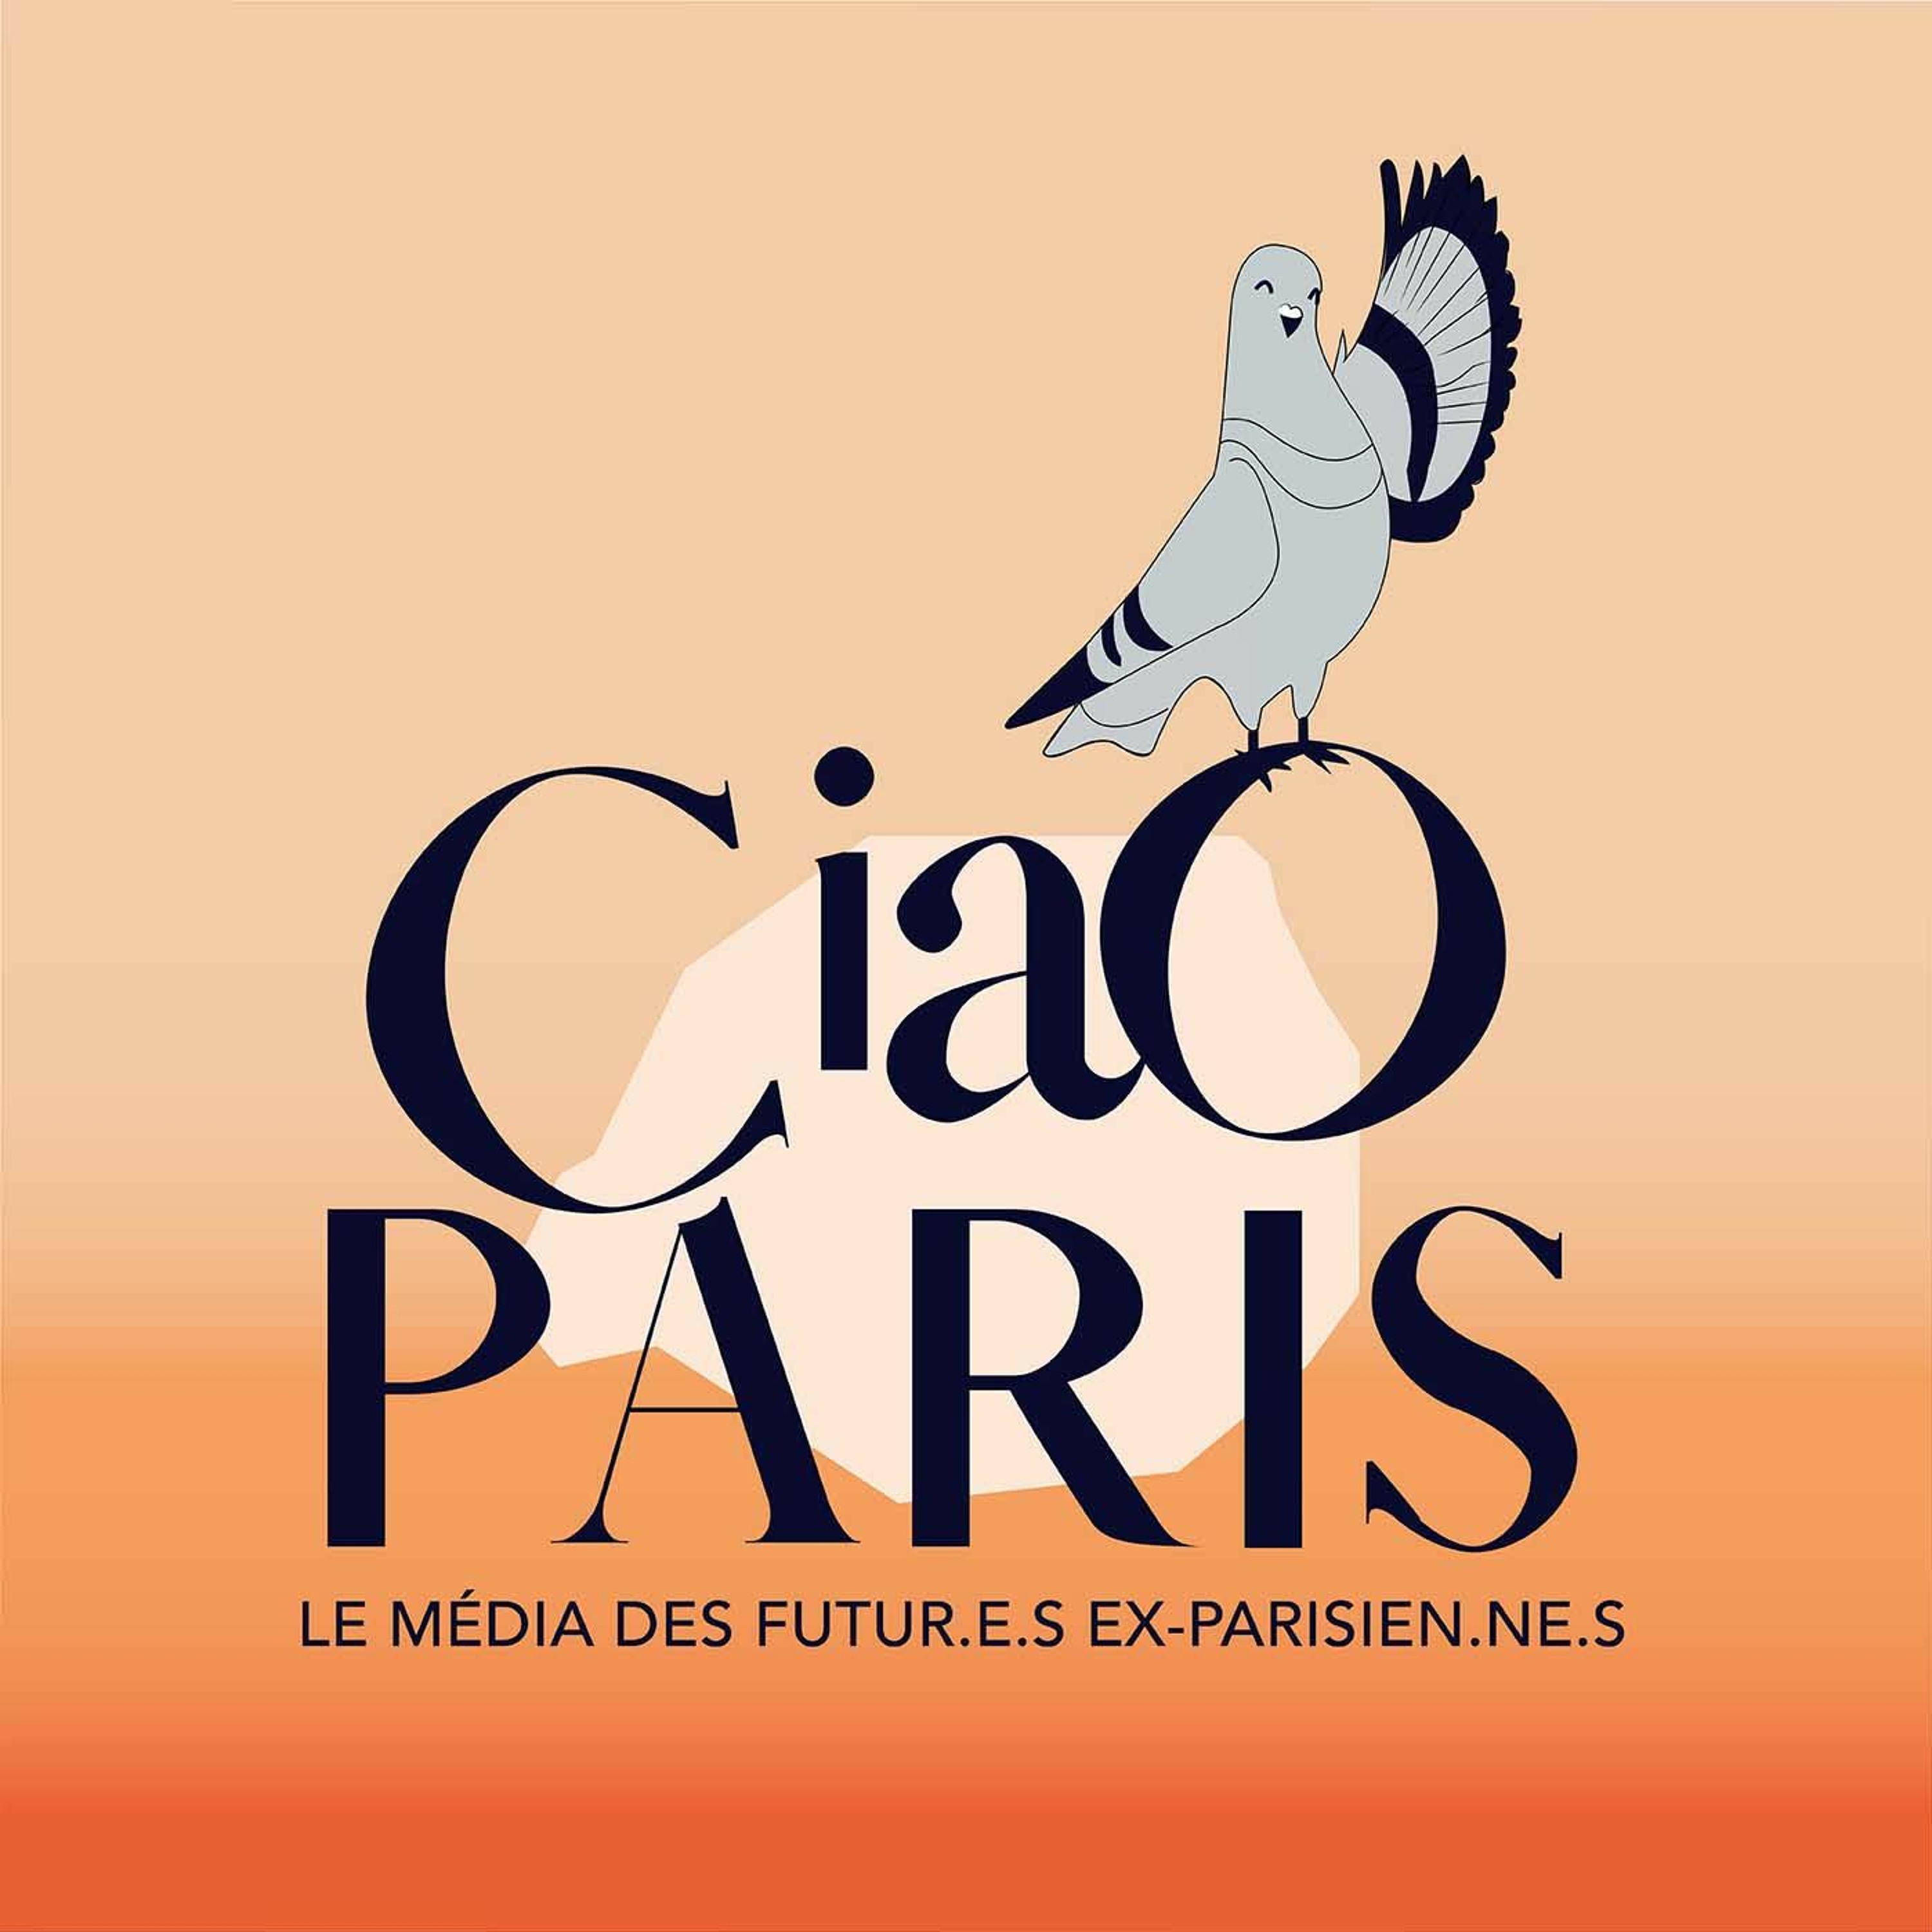 Ciao Paris… Et demain ? “La Nature fera l’Histoire” avec Jean Viard, sociologue